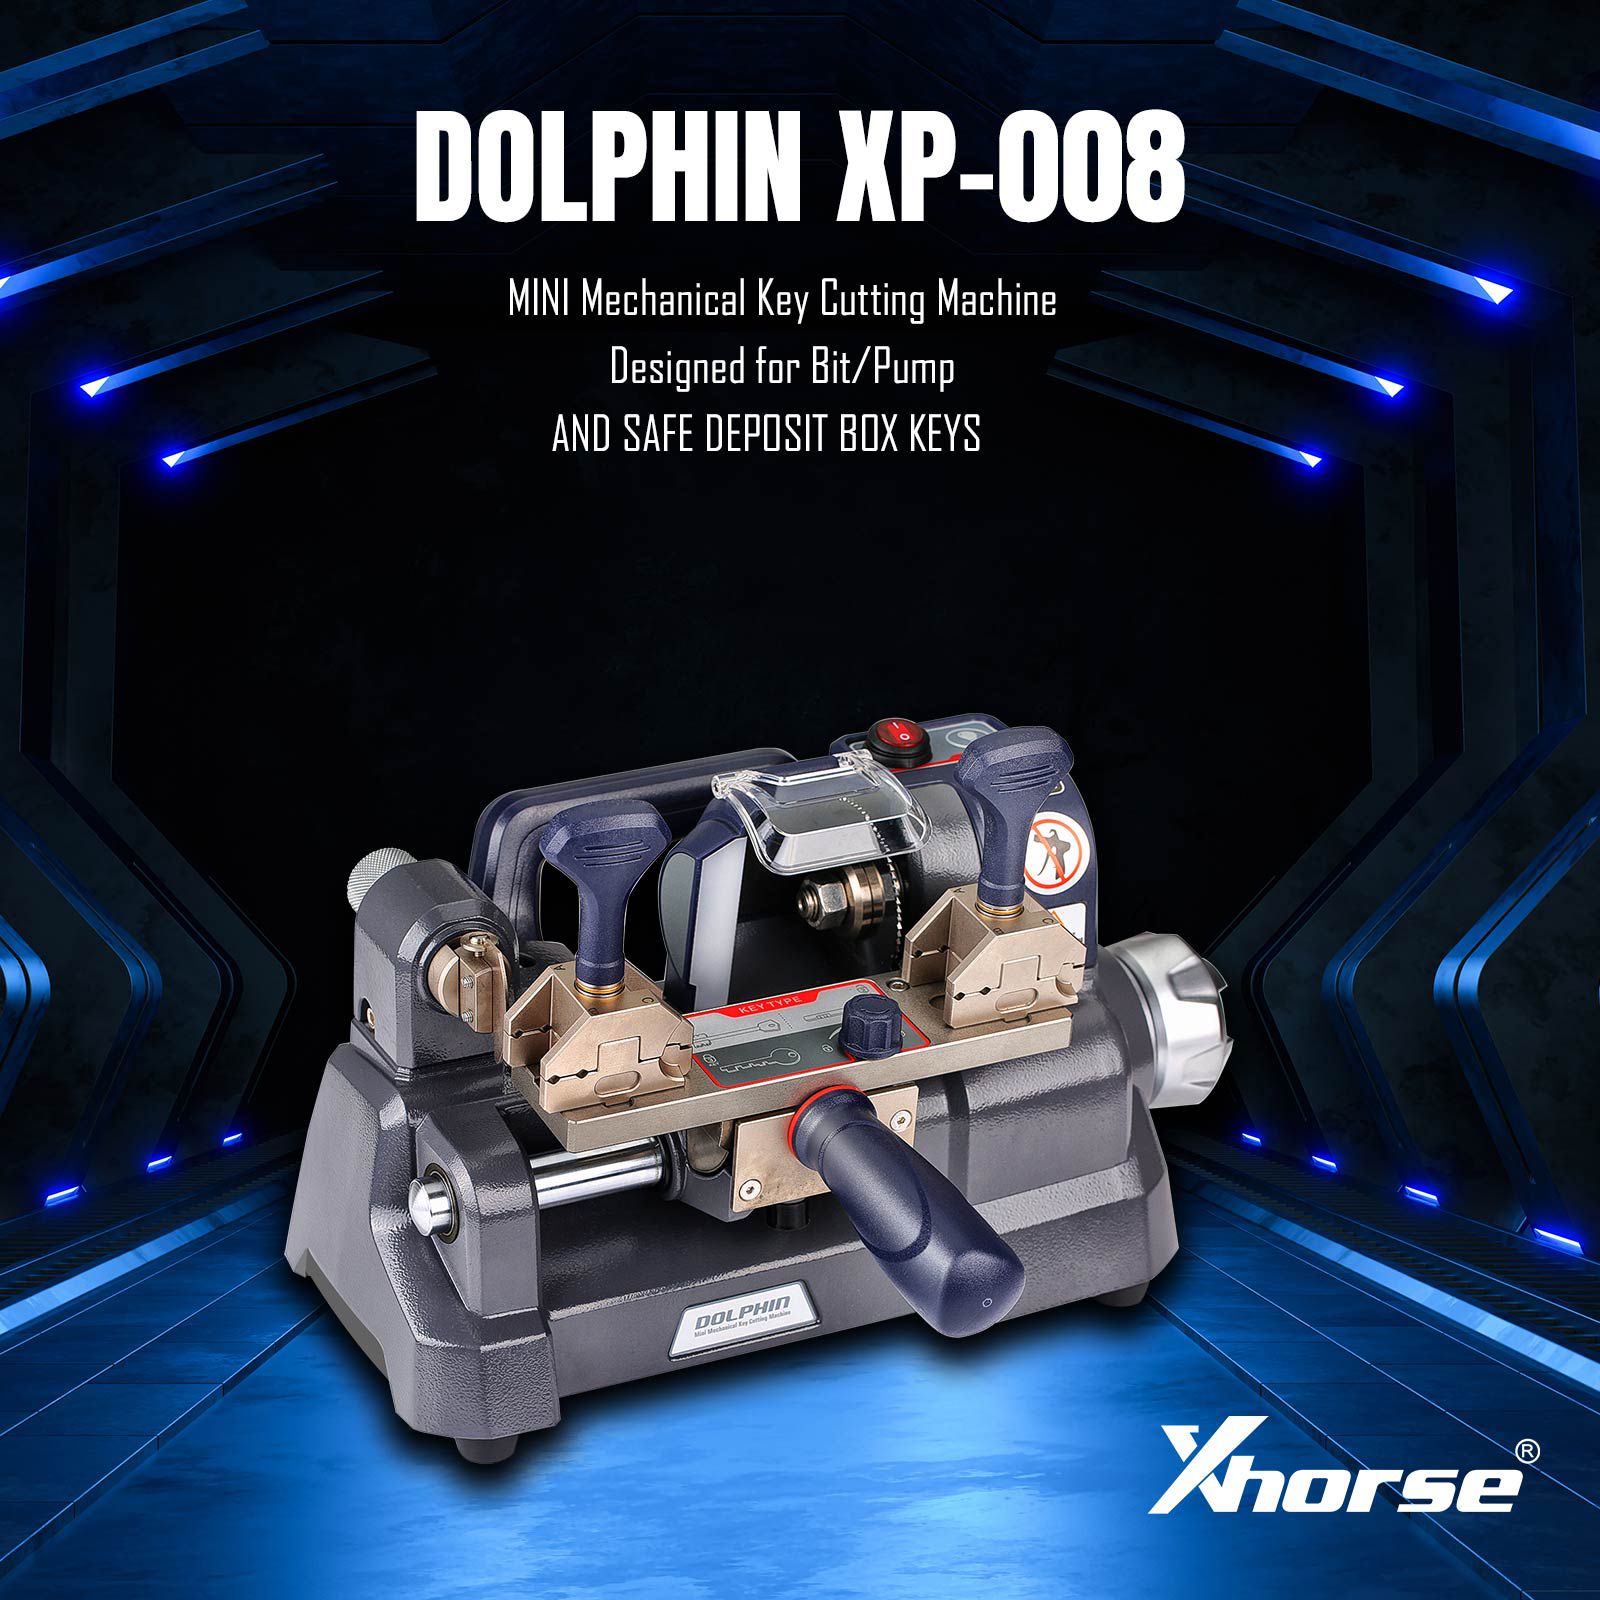 Mais novo Xhorse Dolphin XP-008 Máquina de Corte Chave Mini Mecânica para Bit Especial / Chaves de Bit Duplo